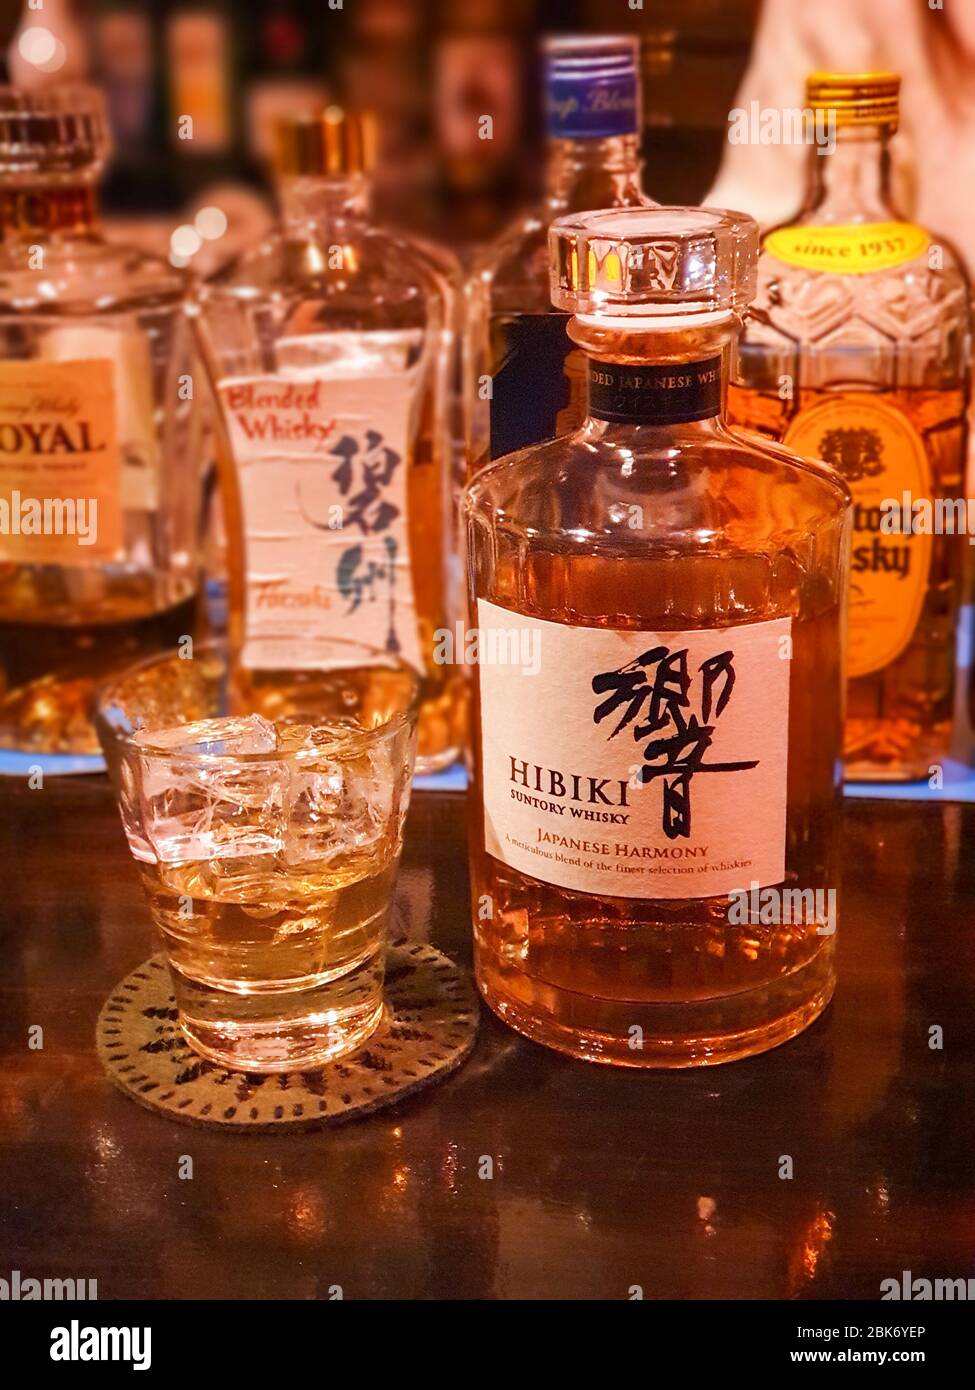 Bottle and Glass of Japanese Malt Whiskey on Bar Stock Photo